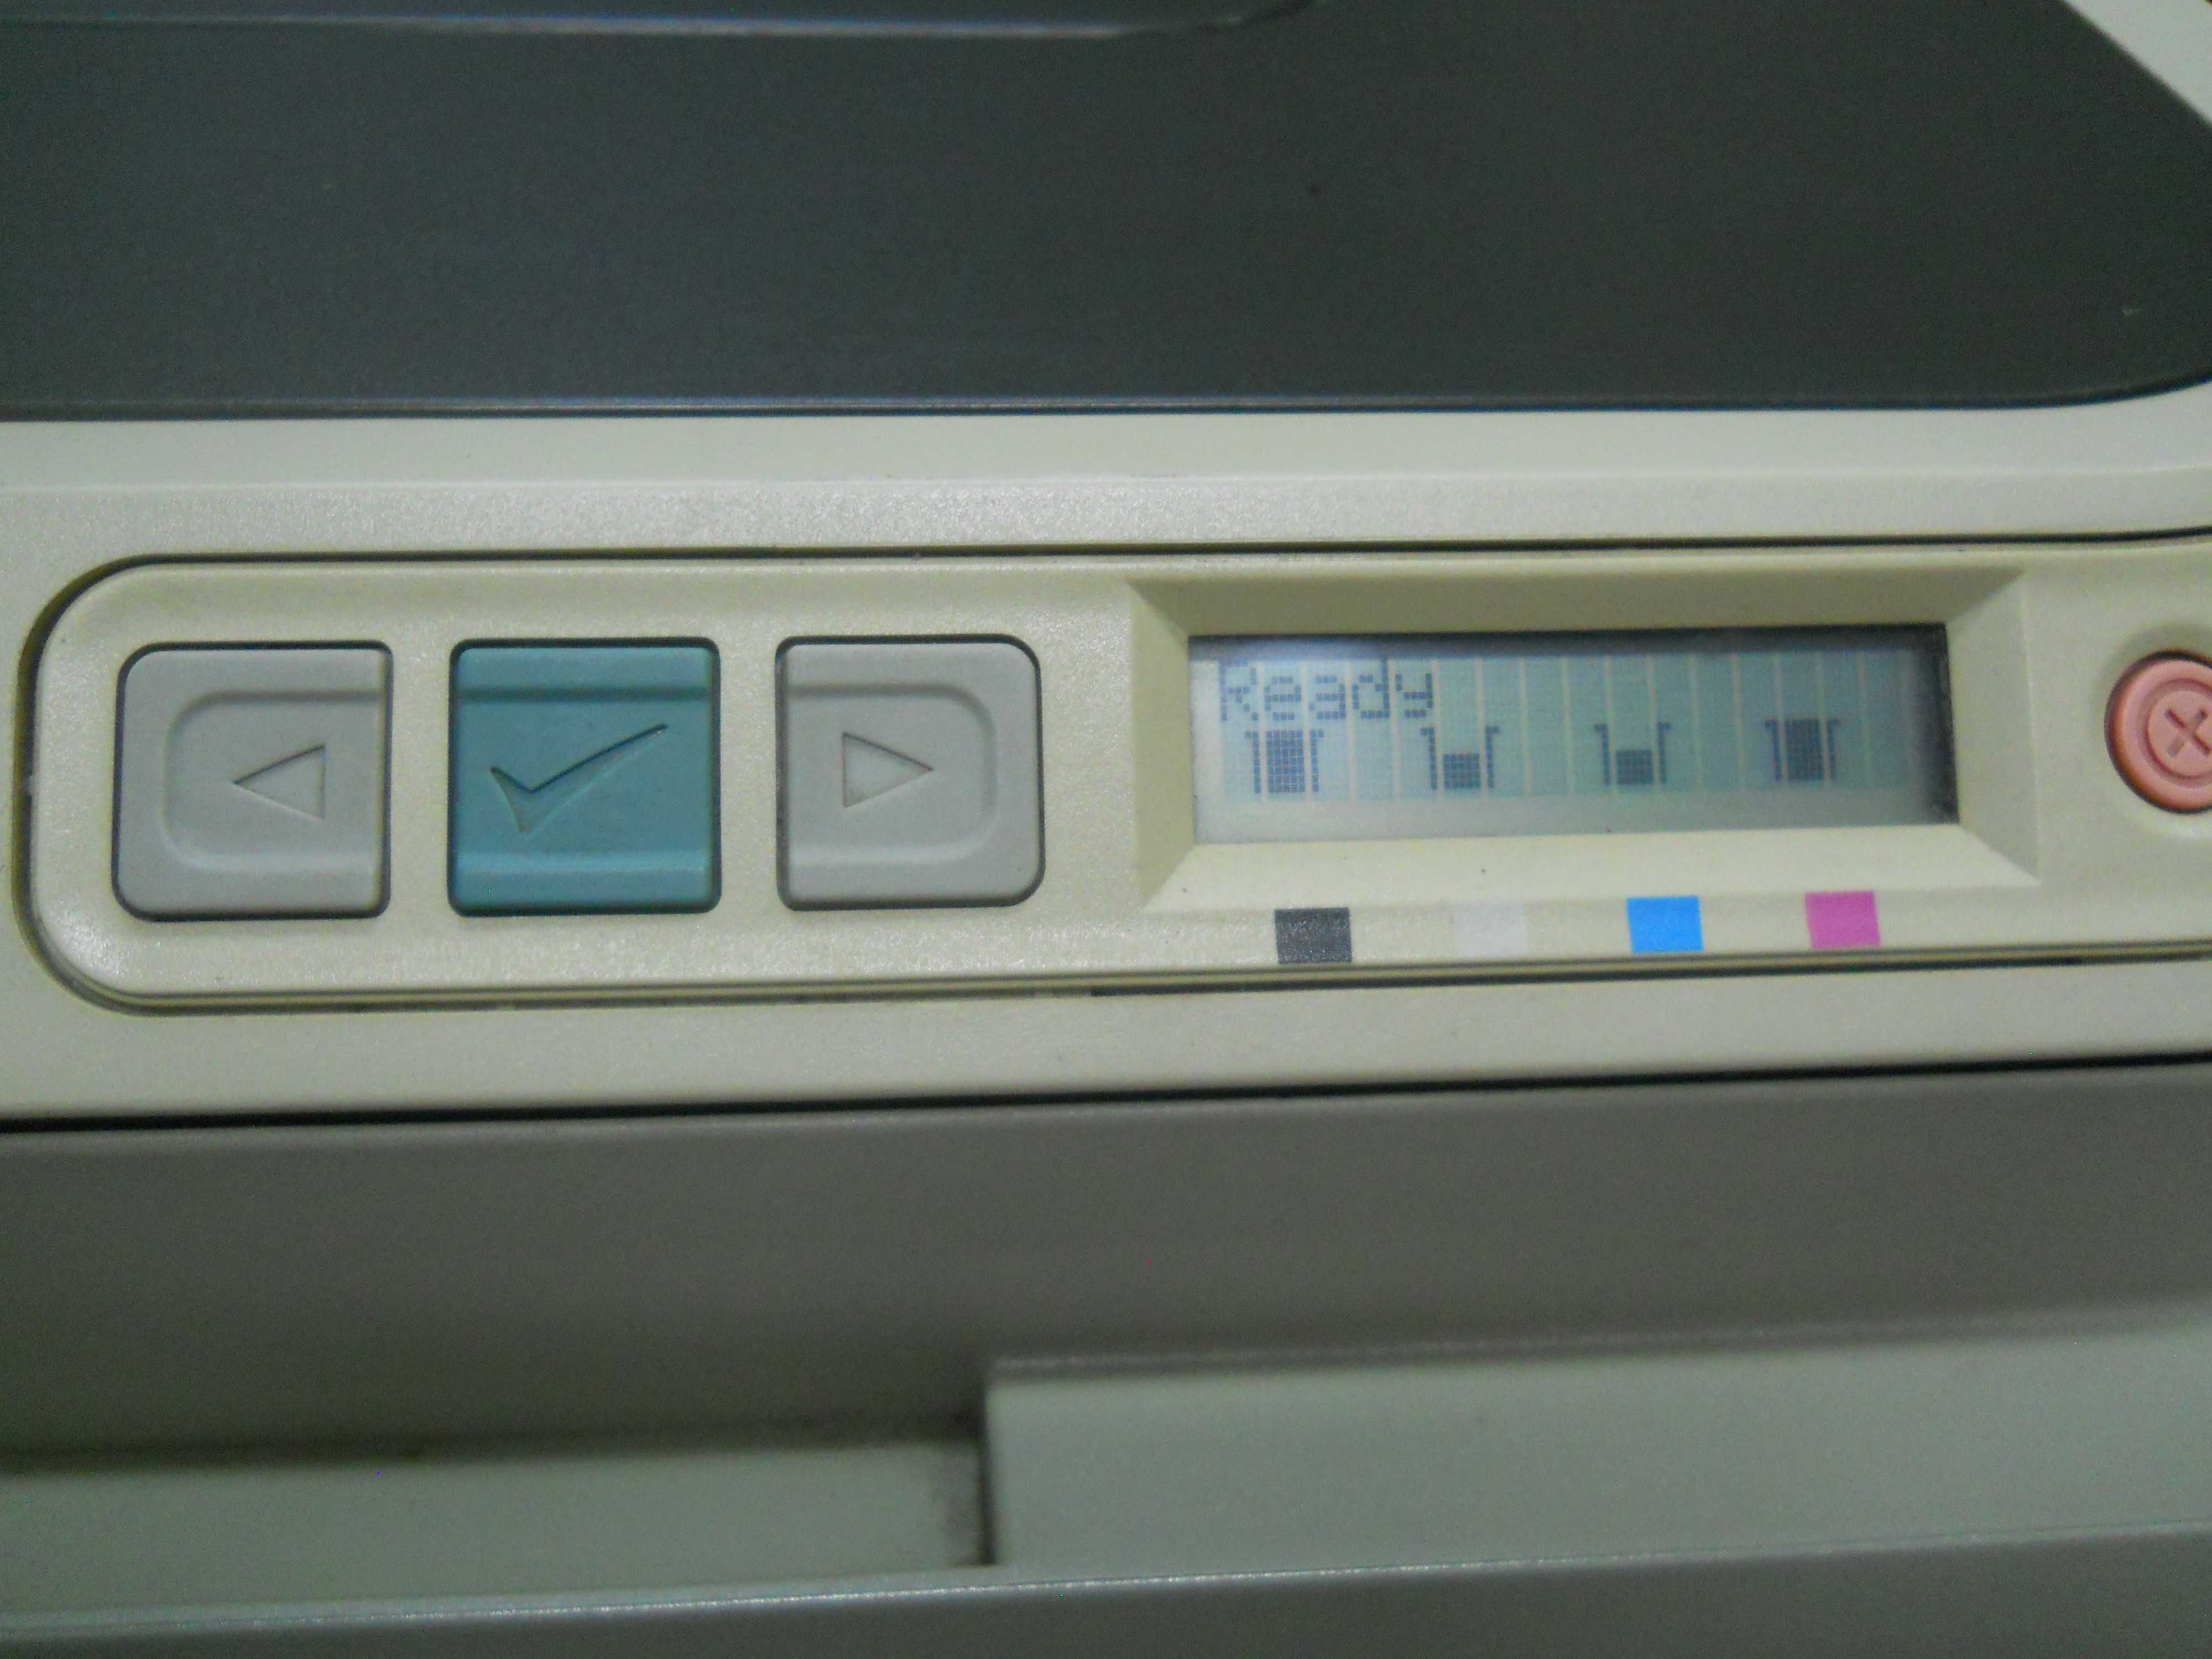 Imprimanta laser color HP 2600N